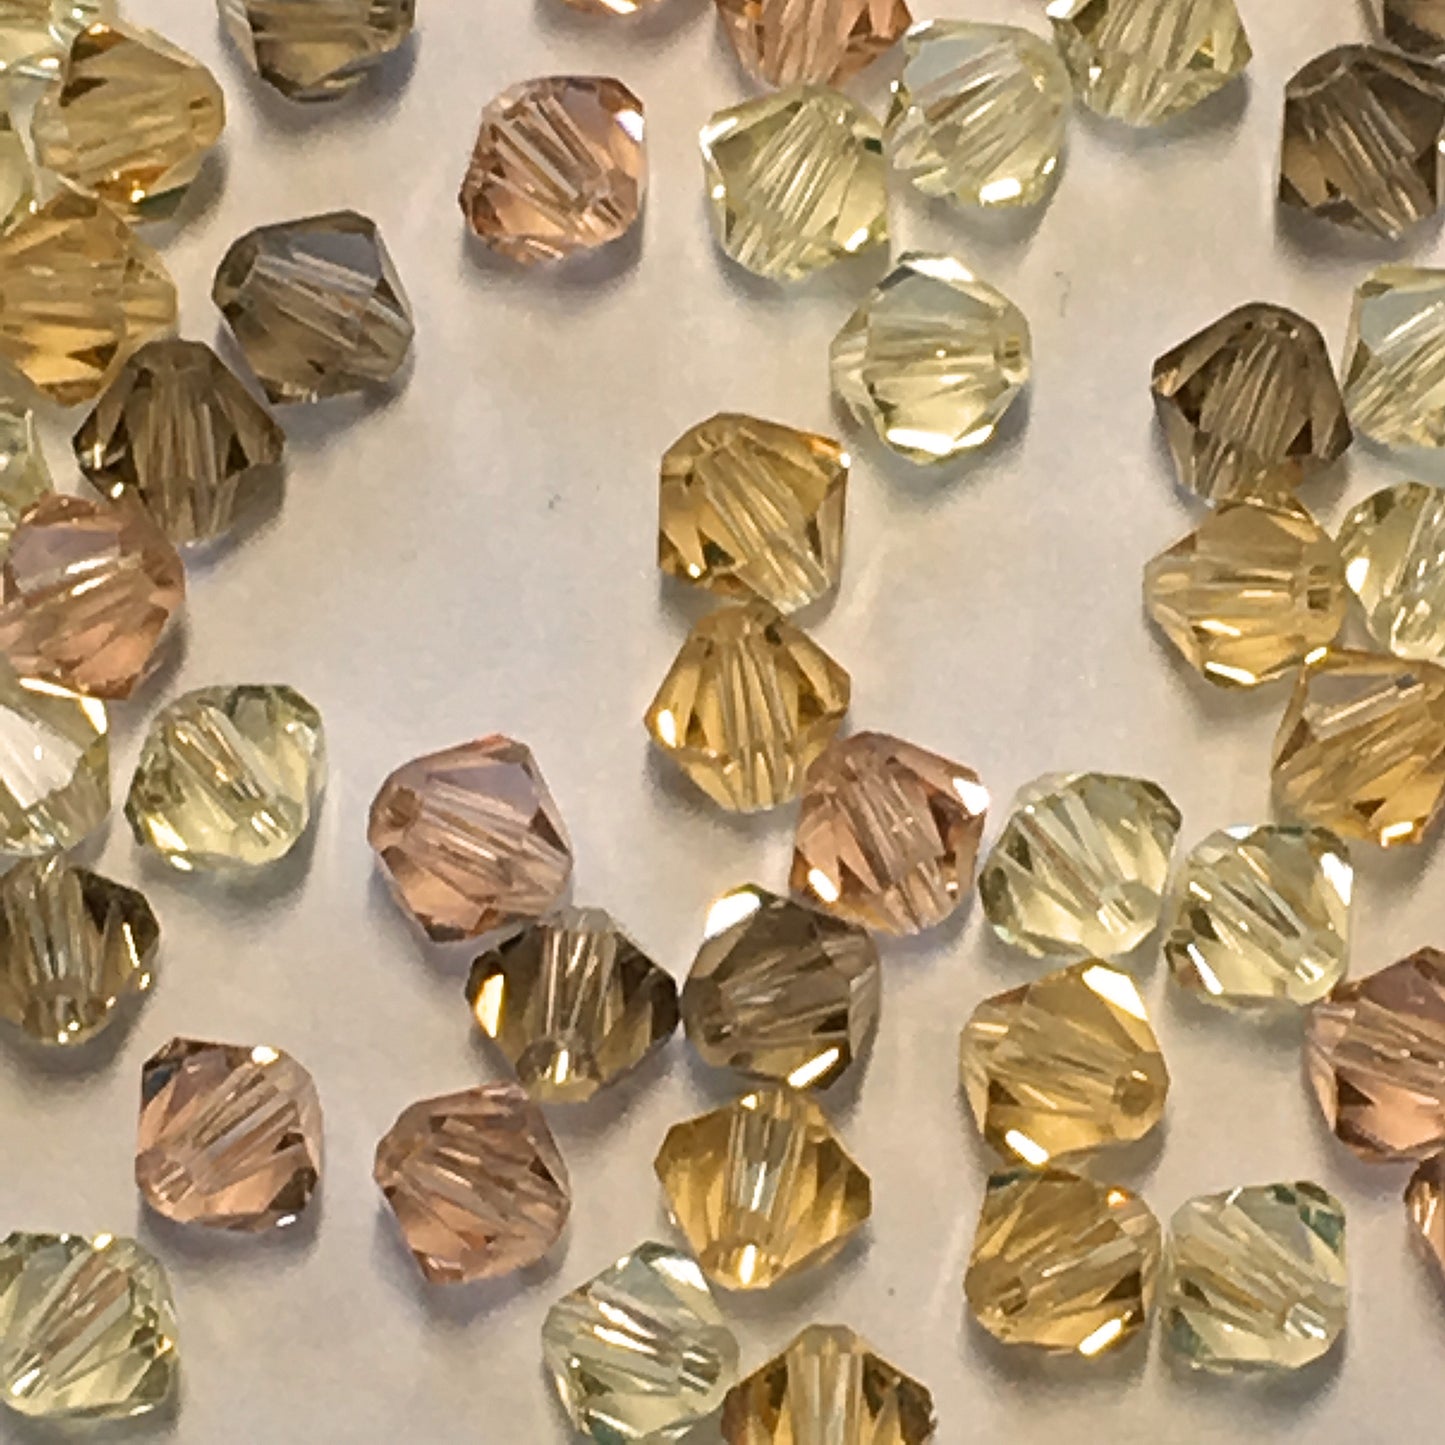 Swarovski Crystal Calm Desert Bicone Bead Mix, 4 mm, 34 Beads